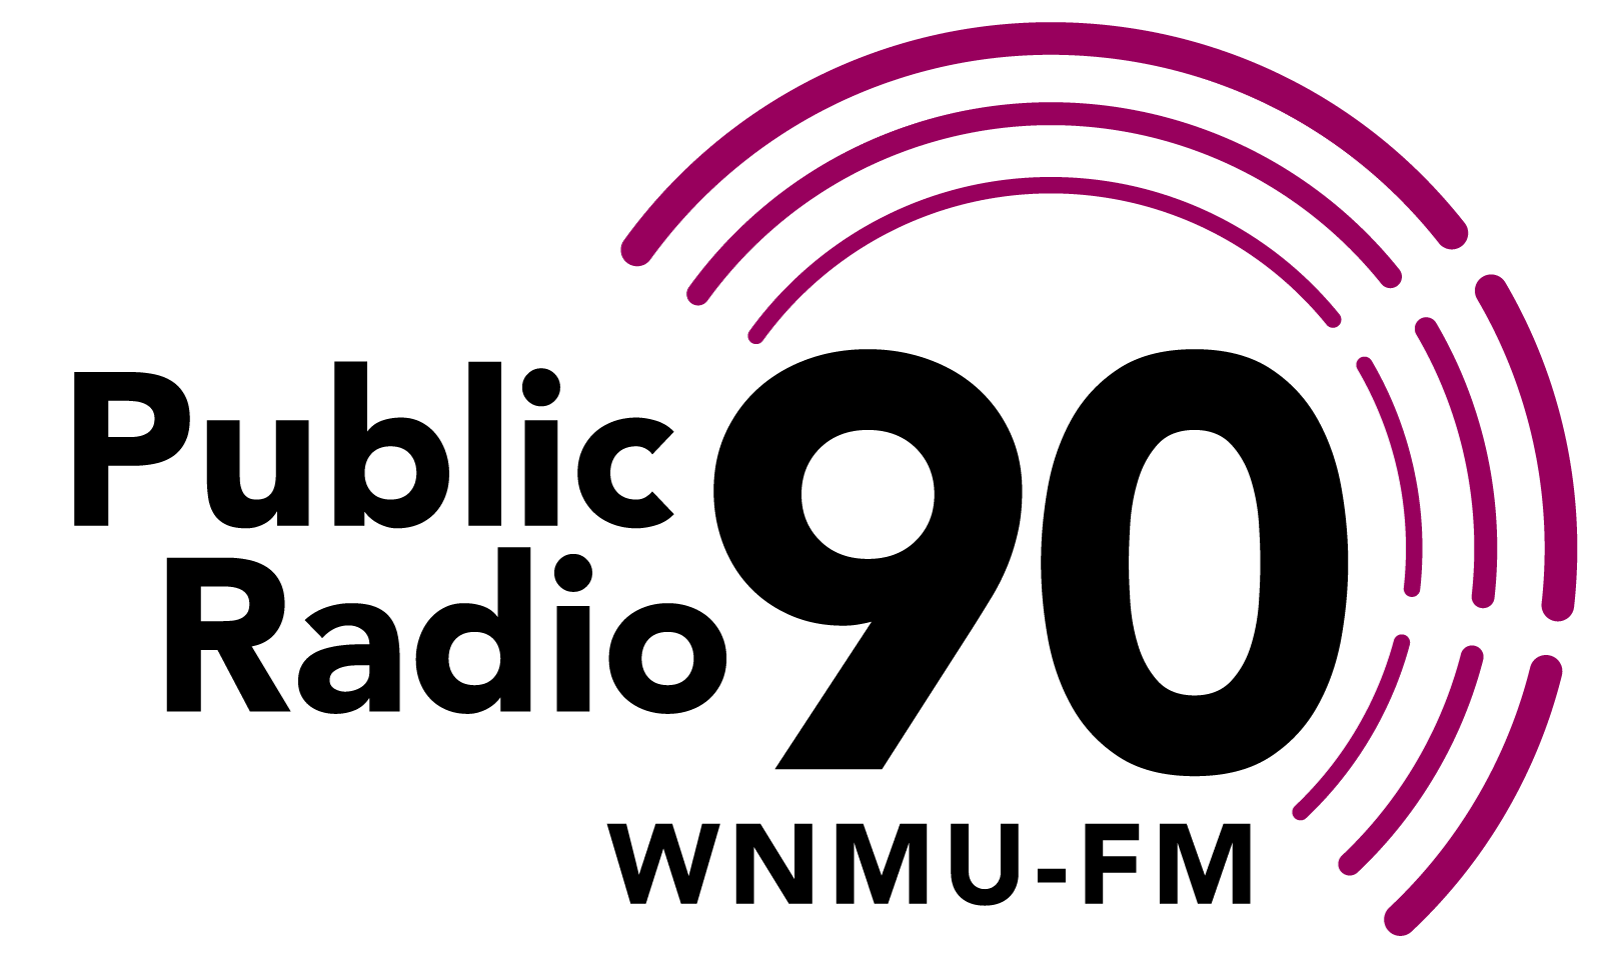 WNMU-FM Logo